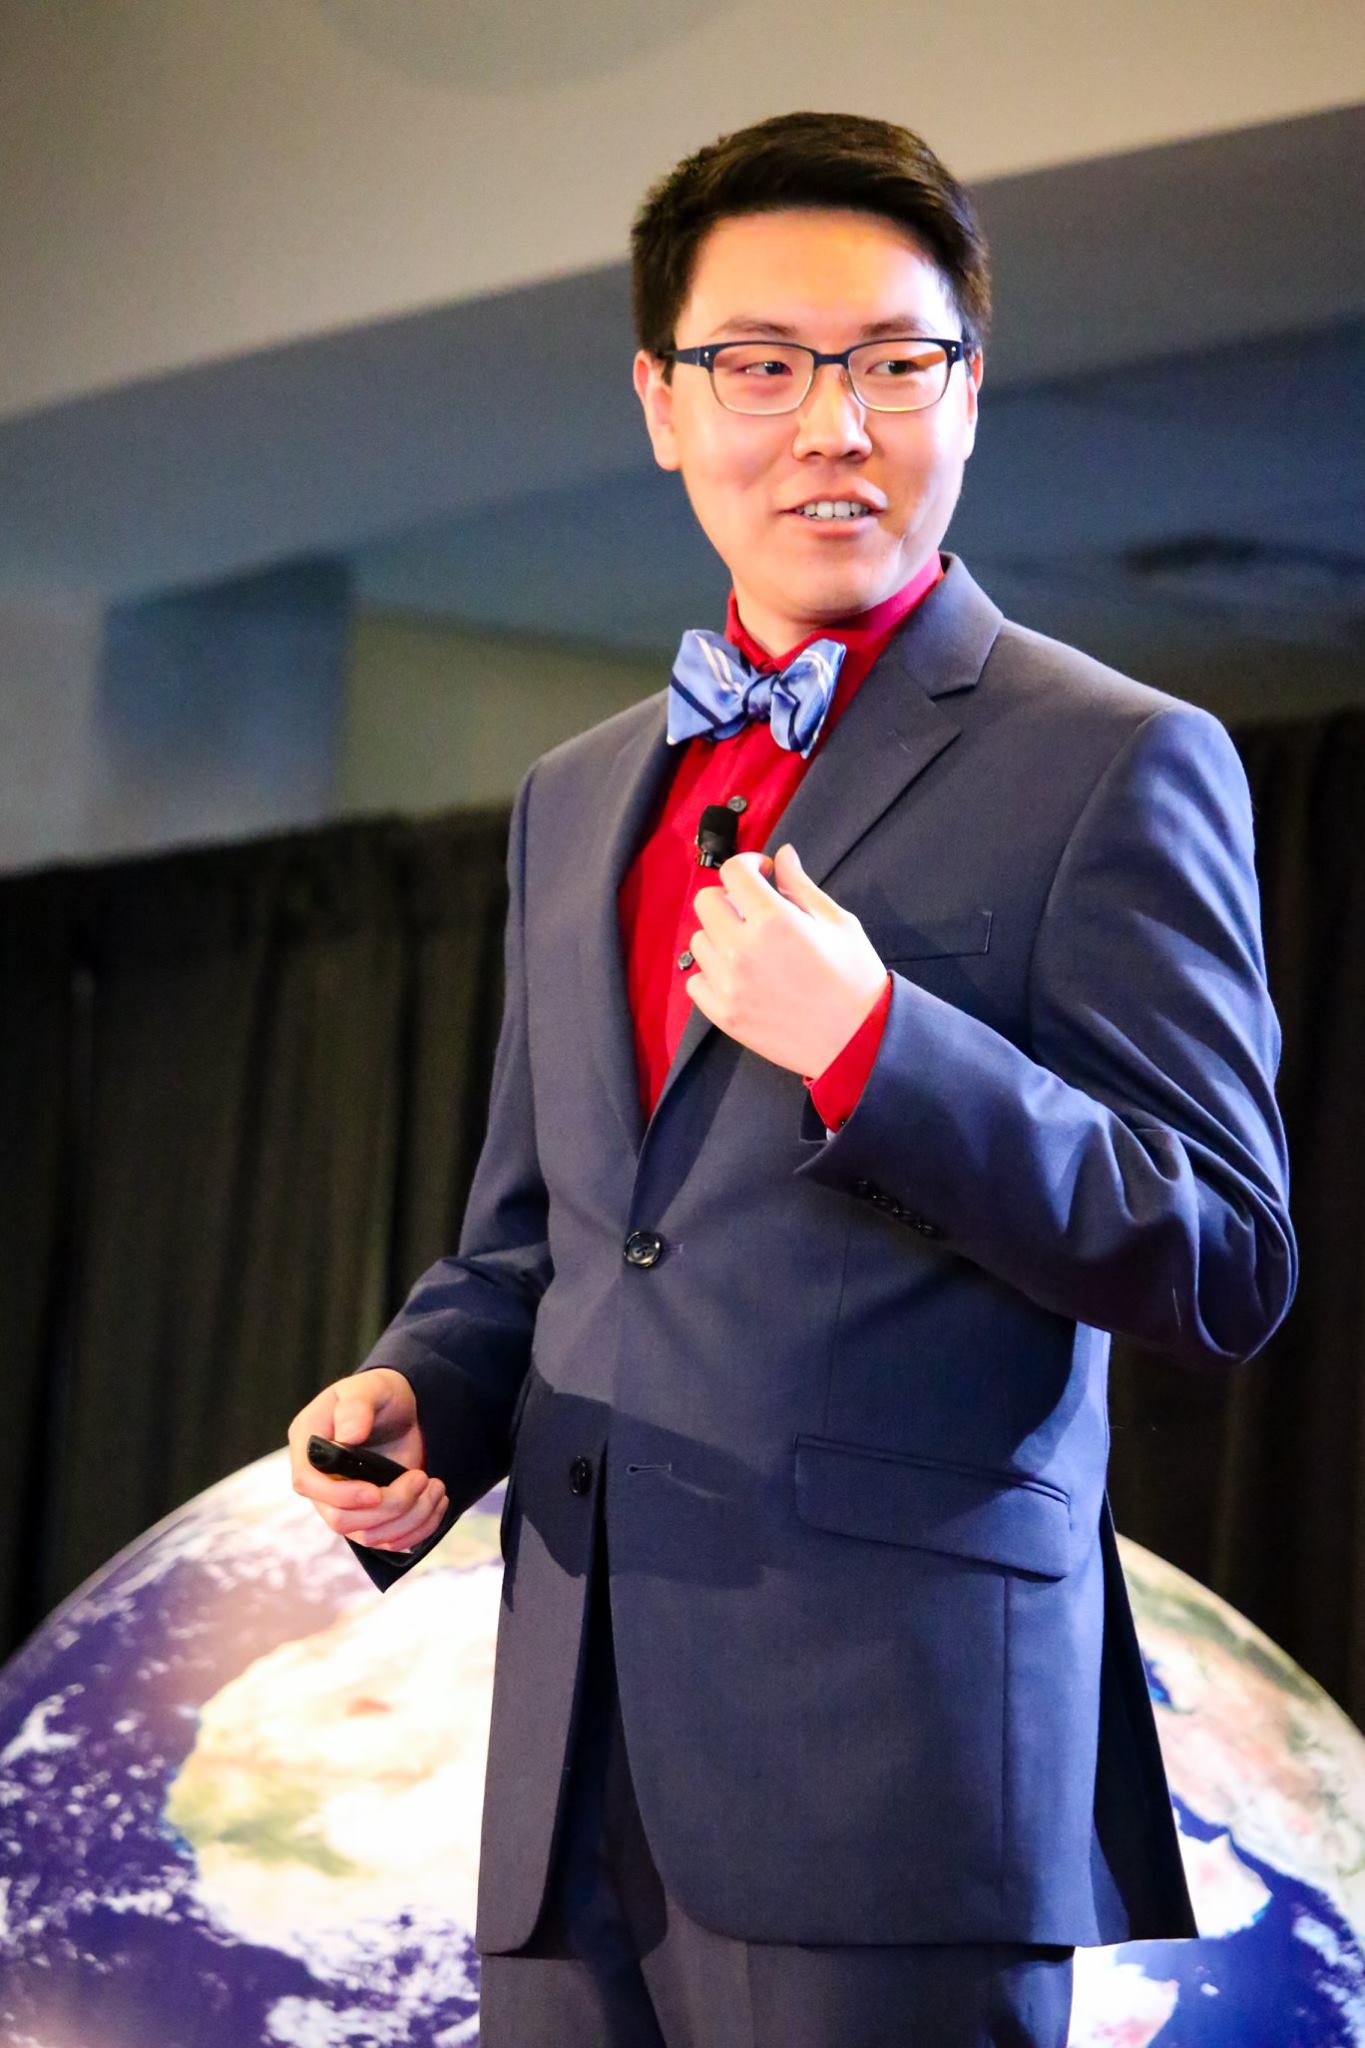 Photo: Boulder video game developer Zhenghua Yang speaks at TEDxCU